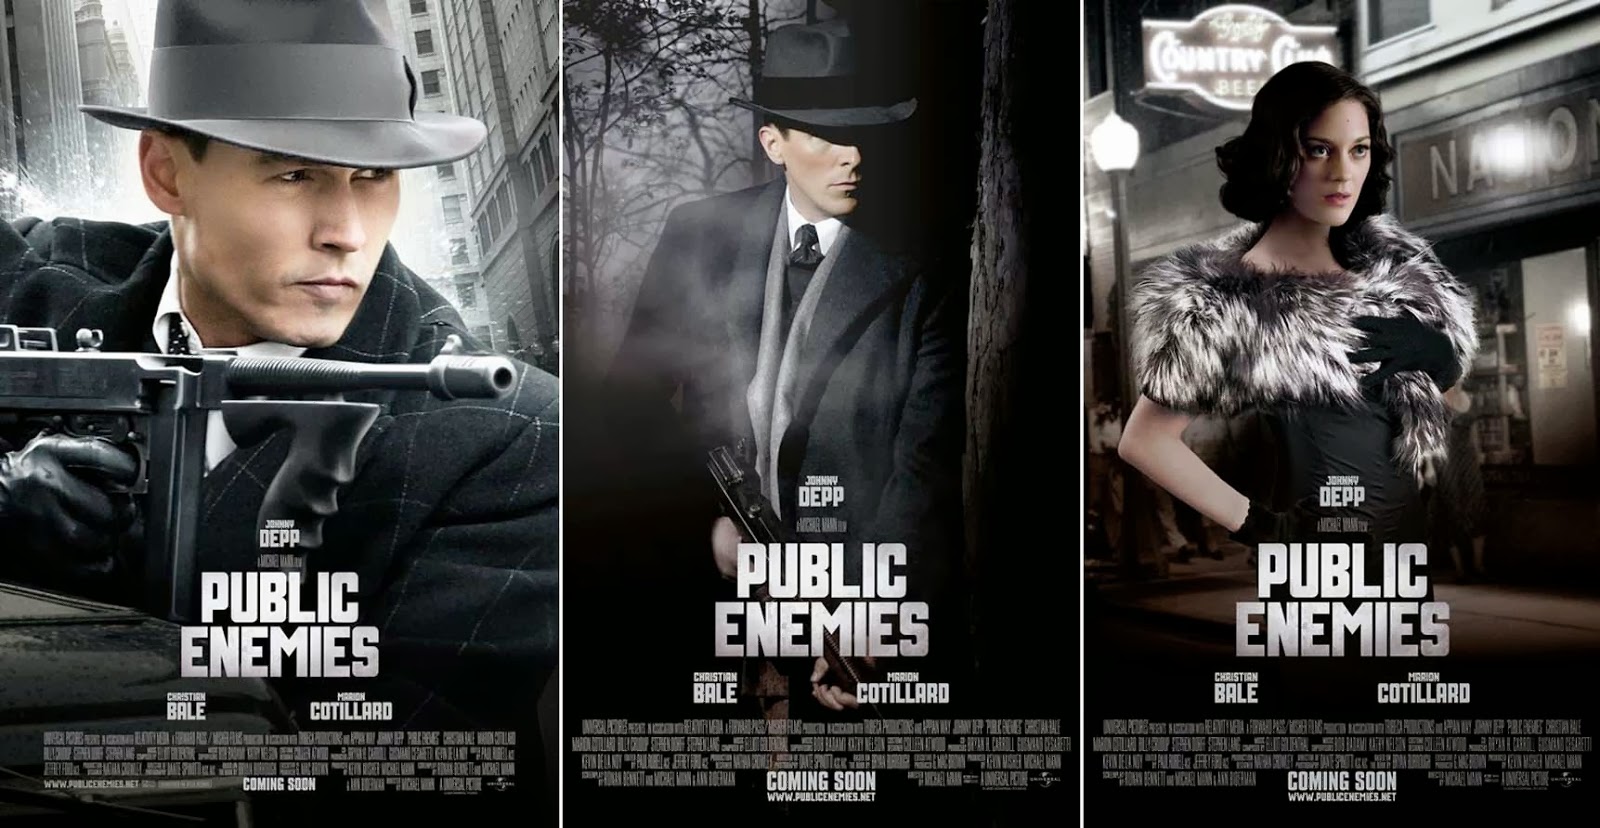 Public Enemies - Wrogowie Publiczni (2009)